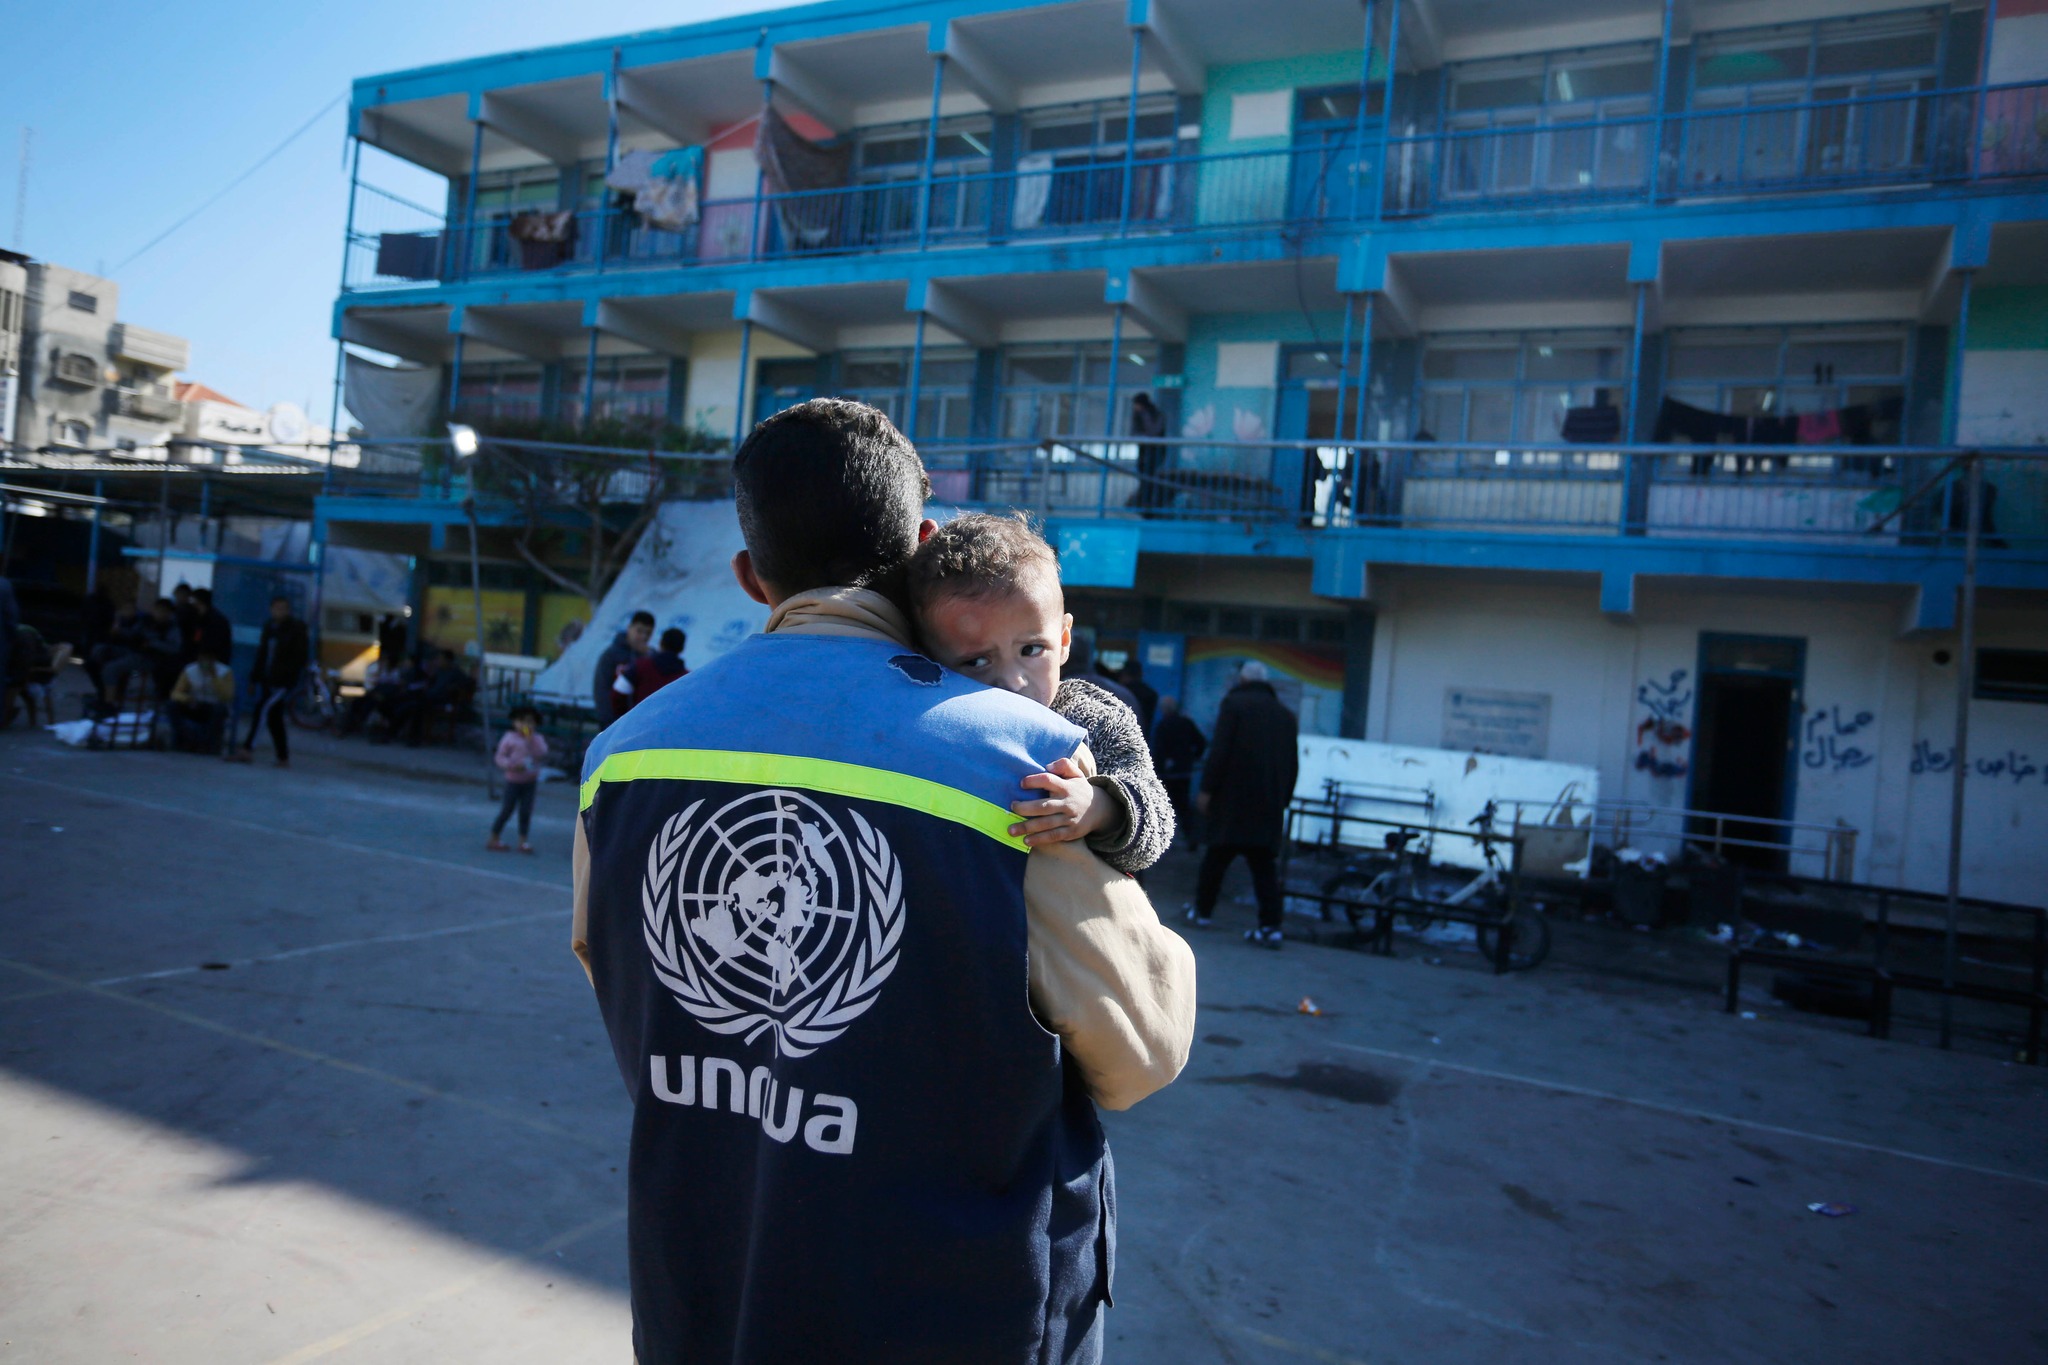 New Zealand negara terkini gantung dana kepada UNRWA